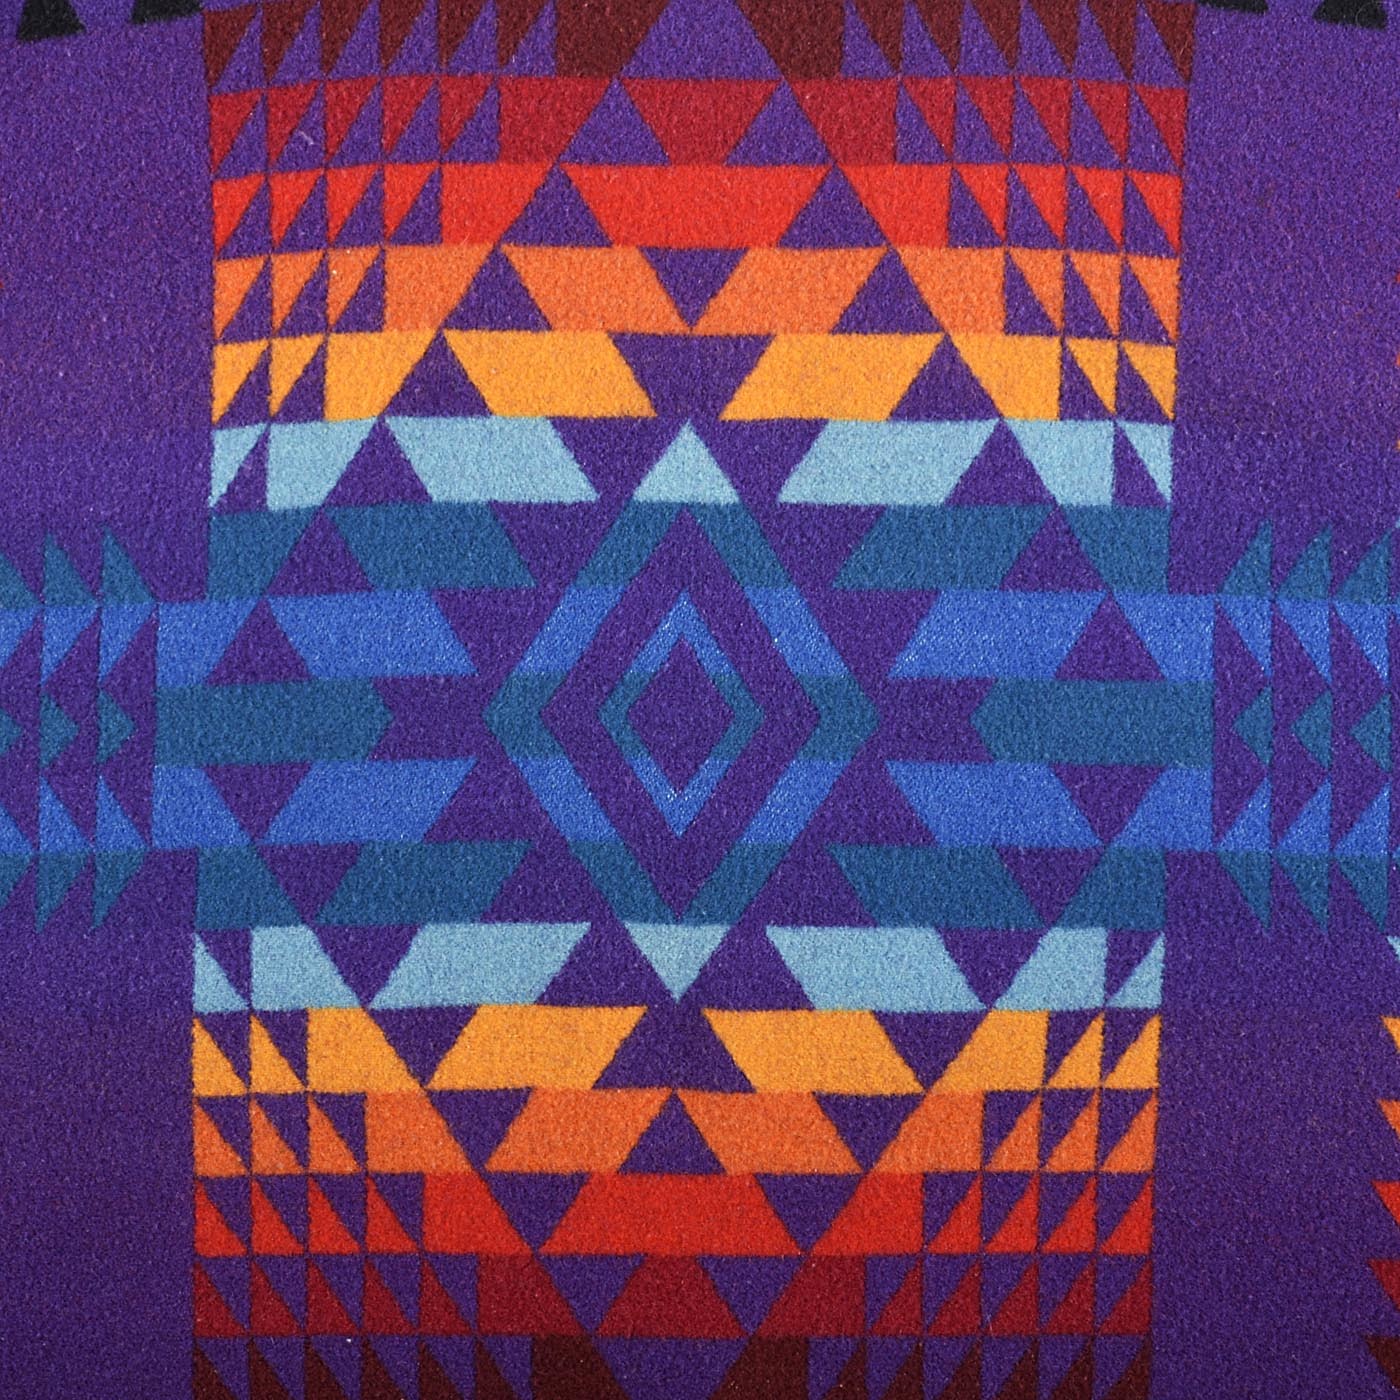 1970s Pendleton Beaver State Colorful Blanket Coat